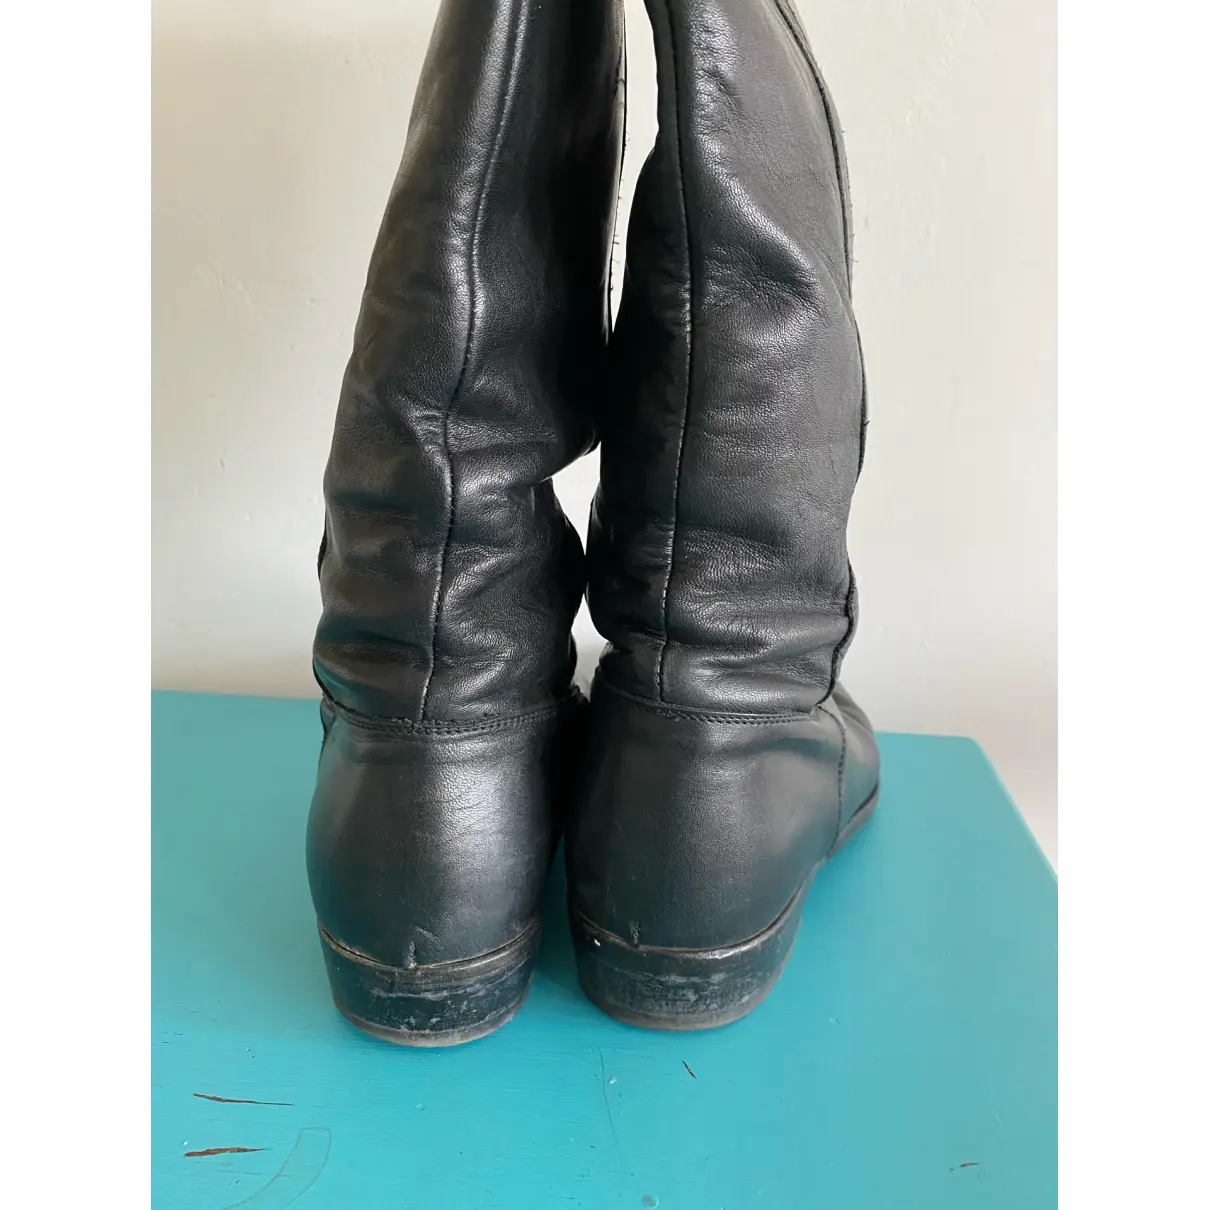 Buy Maison Martin Margiela Leather riding boots online